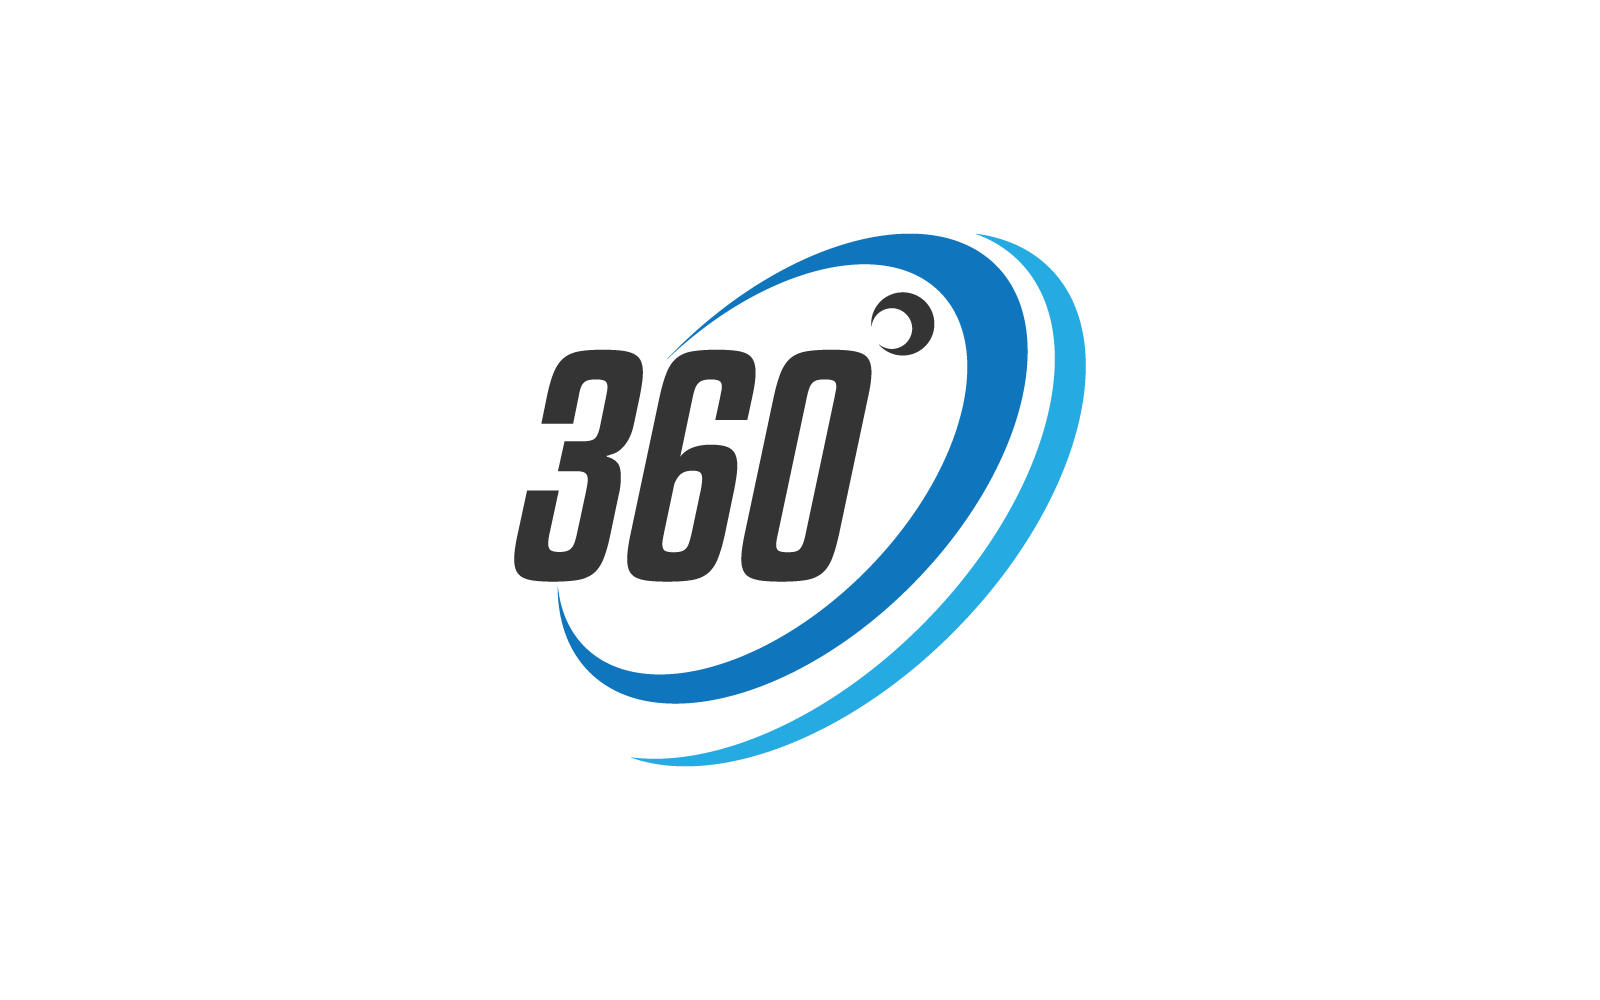 360 view logo icon vector flat design template